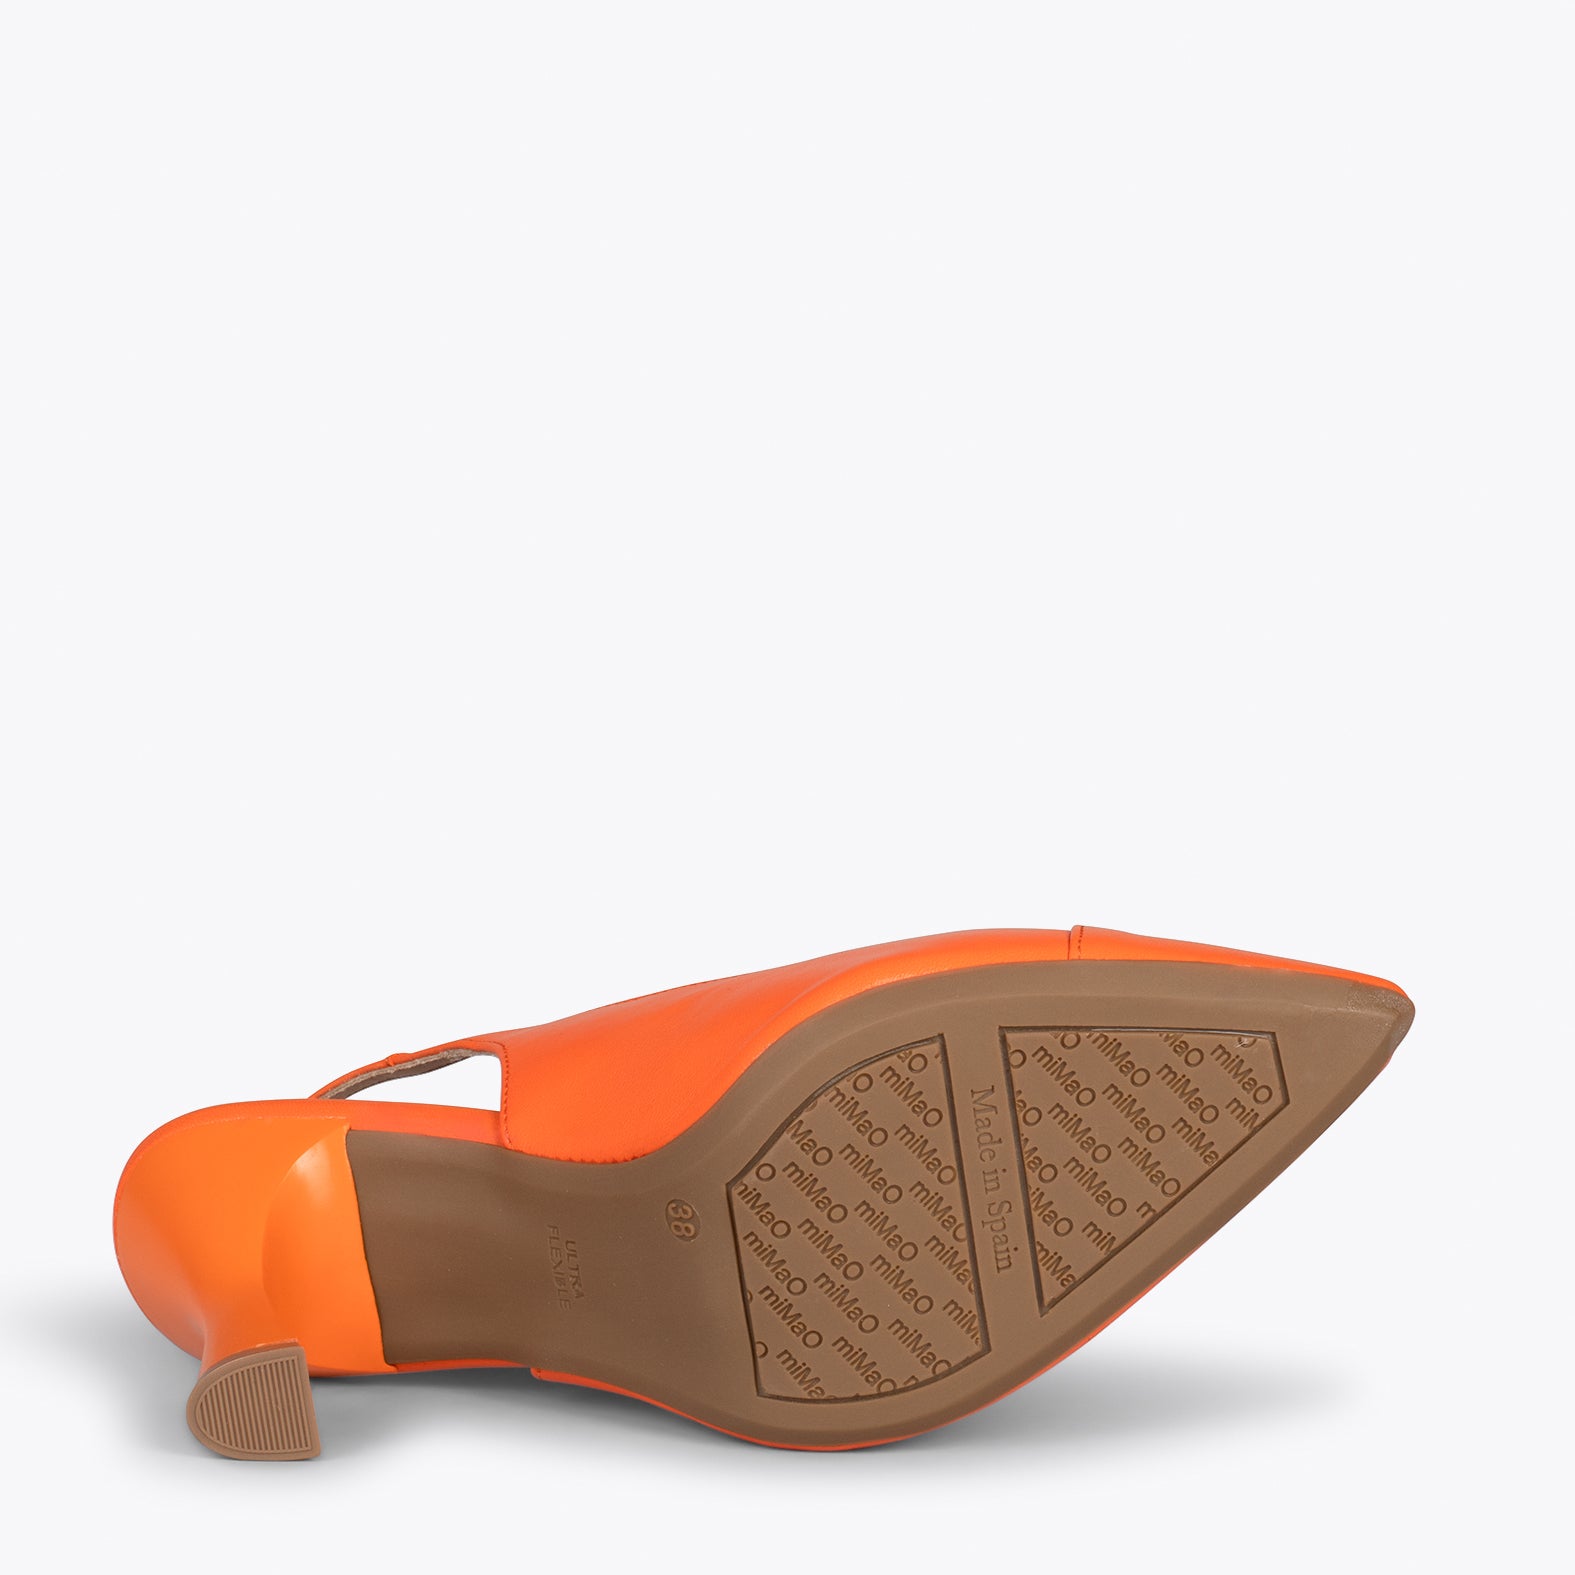 GLAM DESTALONADO – Zapatos de tacón destalonados de napa NARANJA